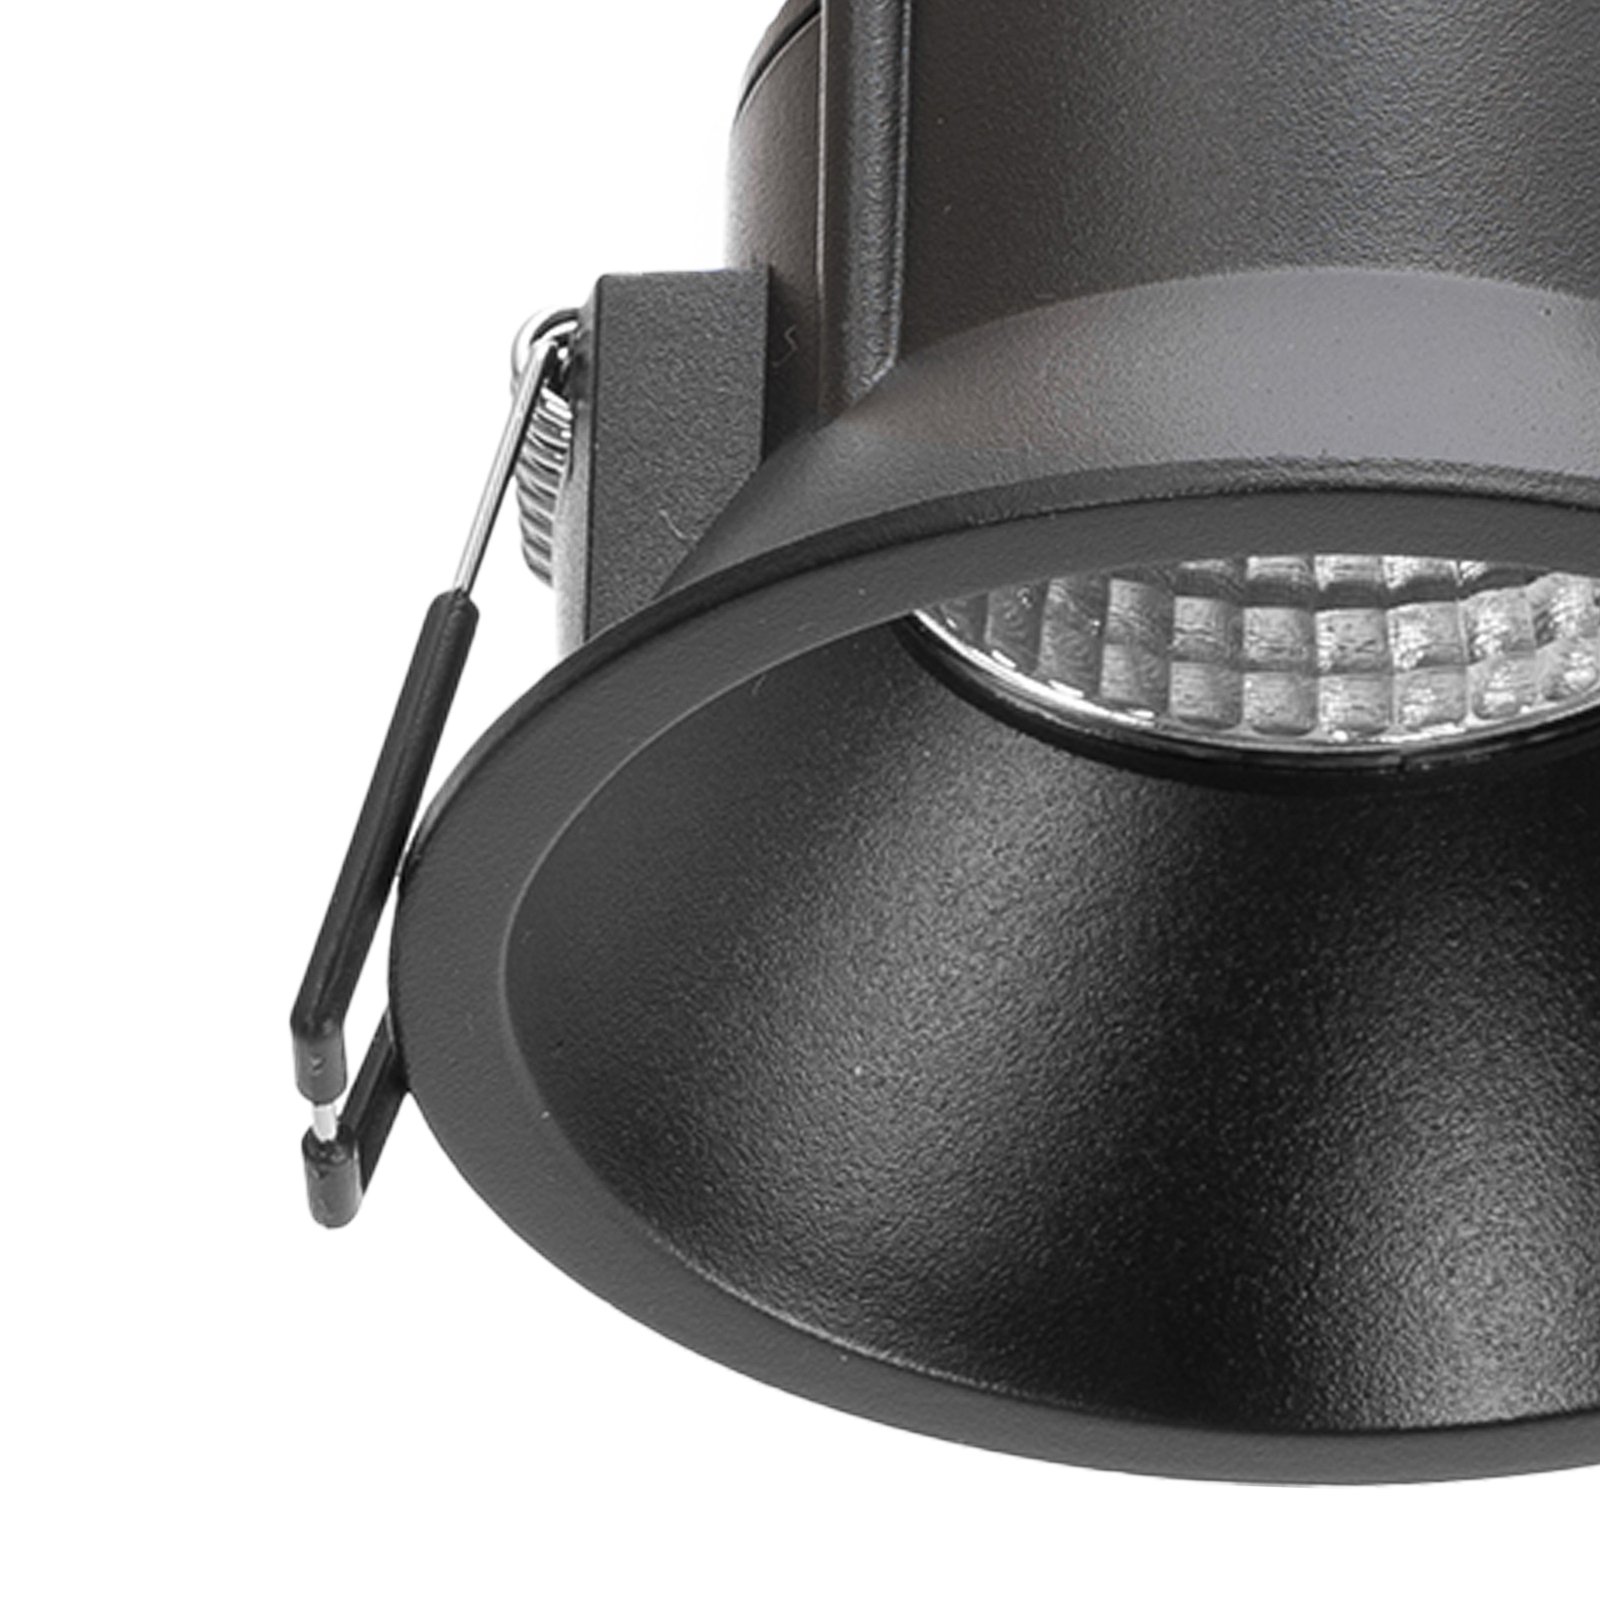 Arcchio LED-es Niria downlight, fekete, 3,000K